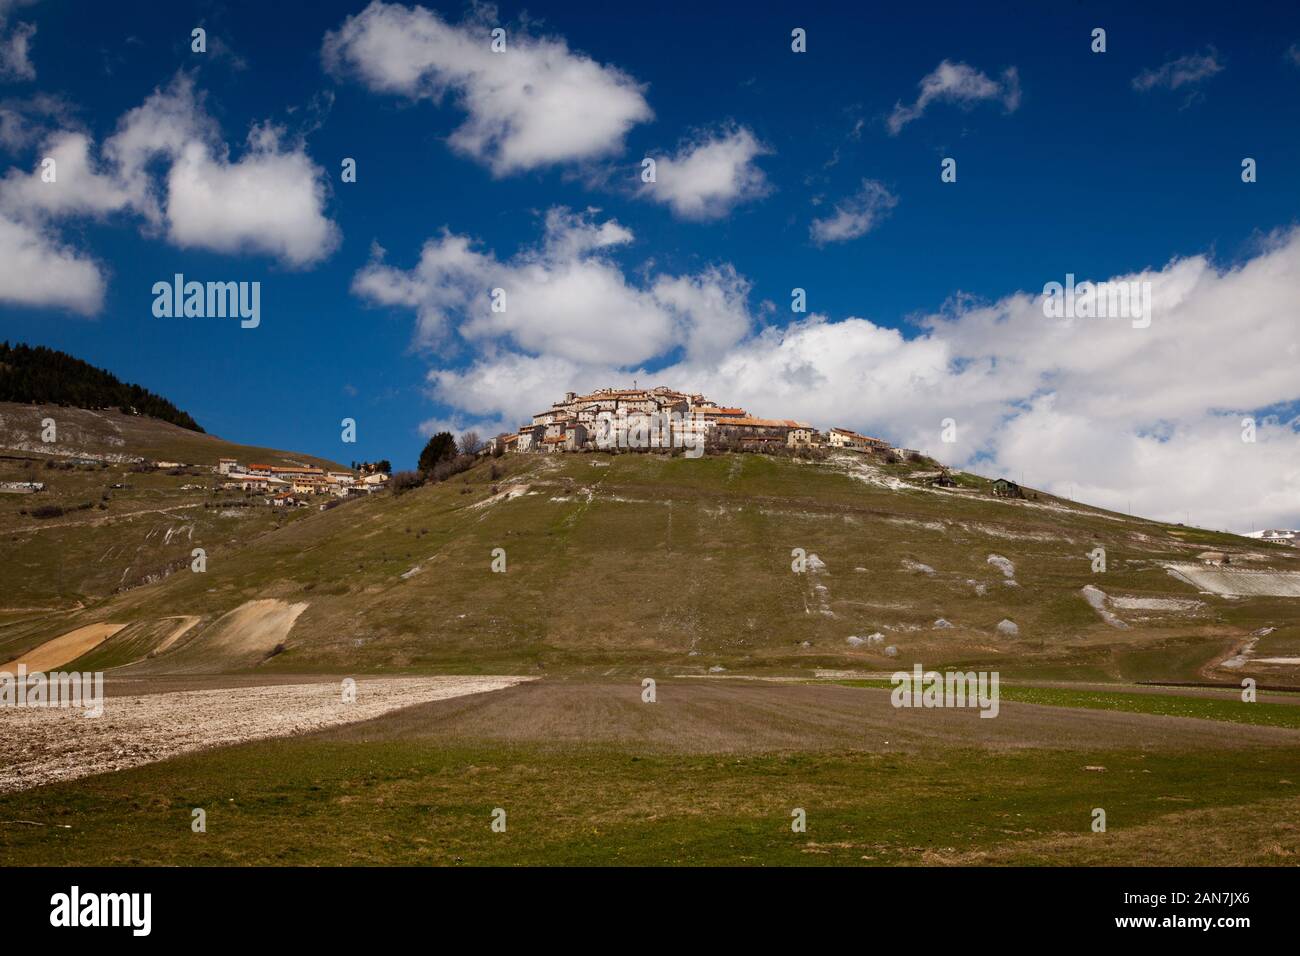 Castelluccio, the highest village in the Apennines perched above the Piano Grande in spring sunshine (pre 2016/7 earthquakes) Stock Photo